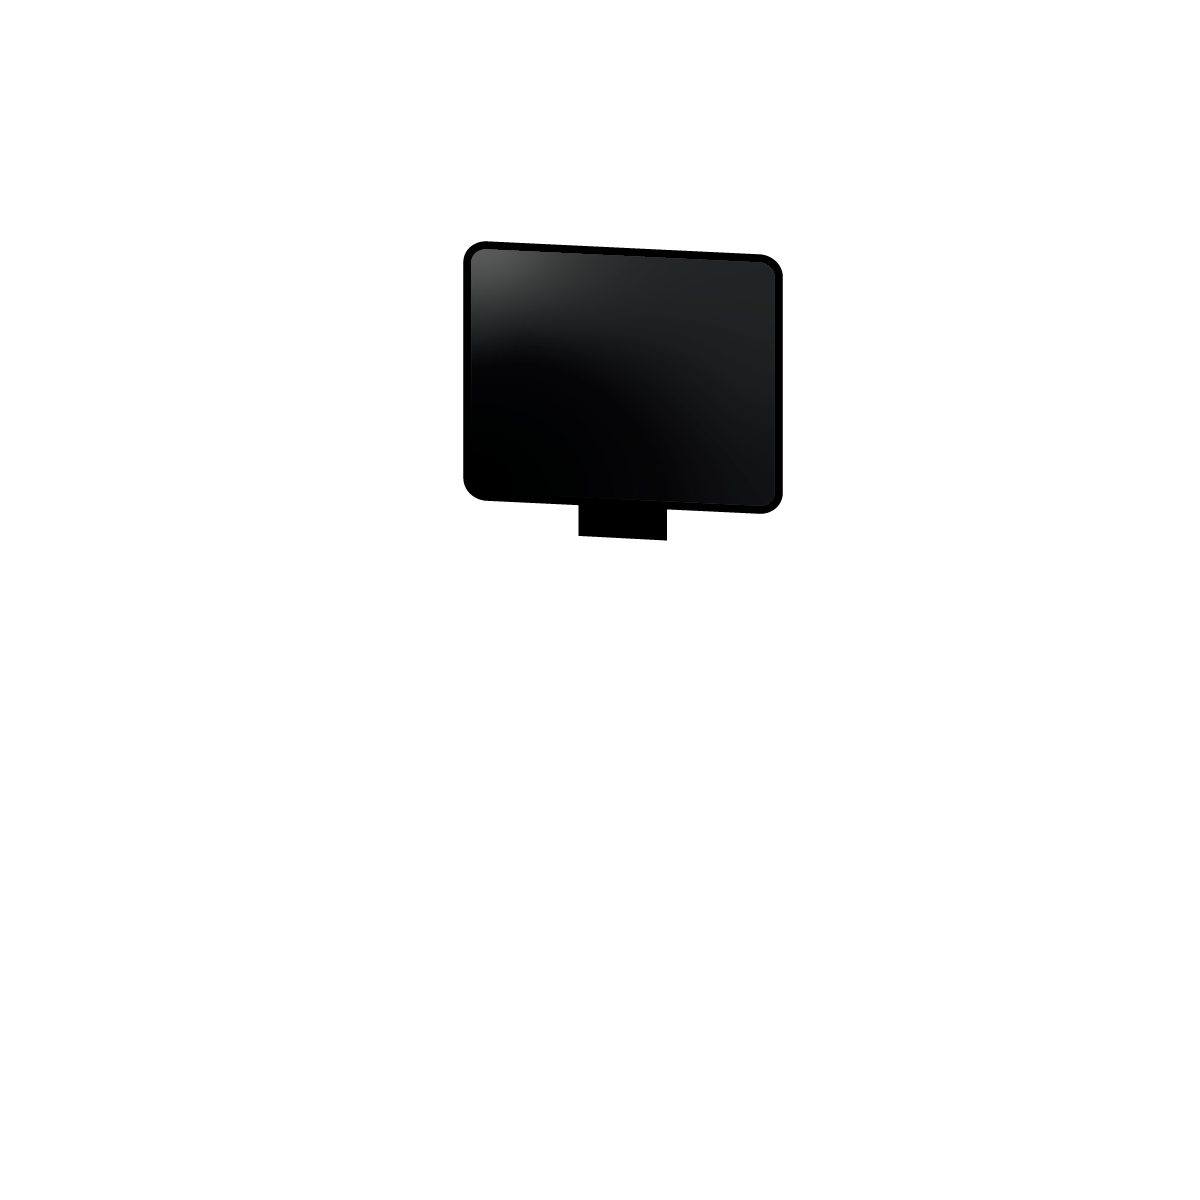 Intiva Technologies